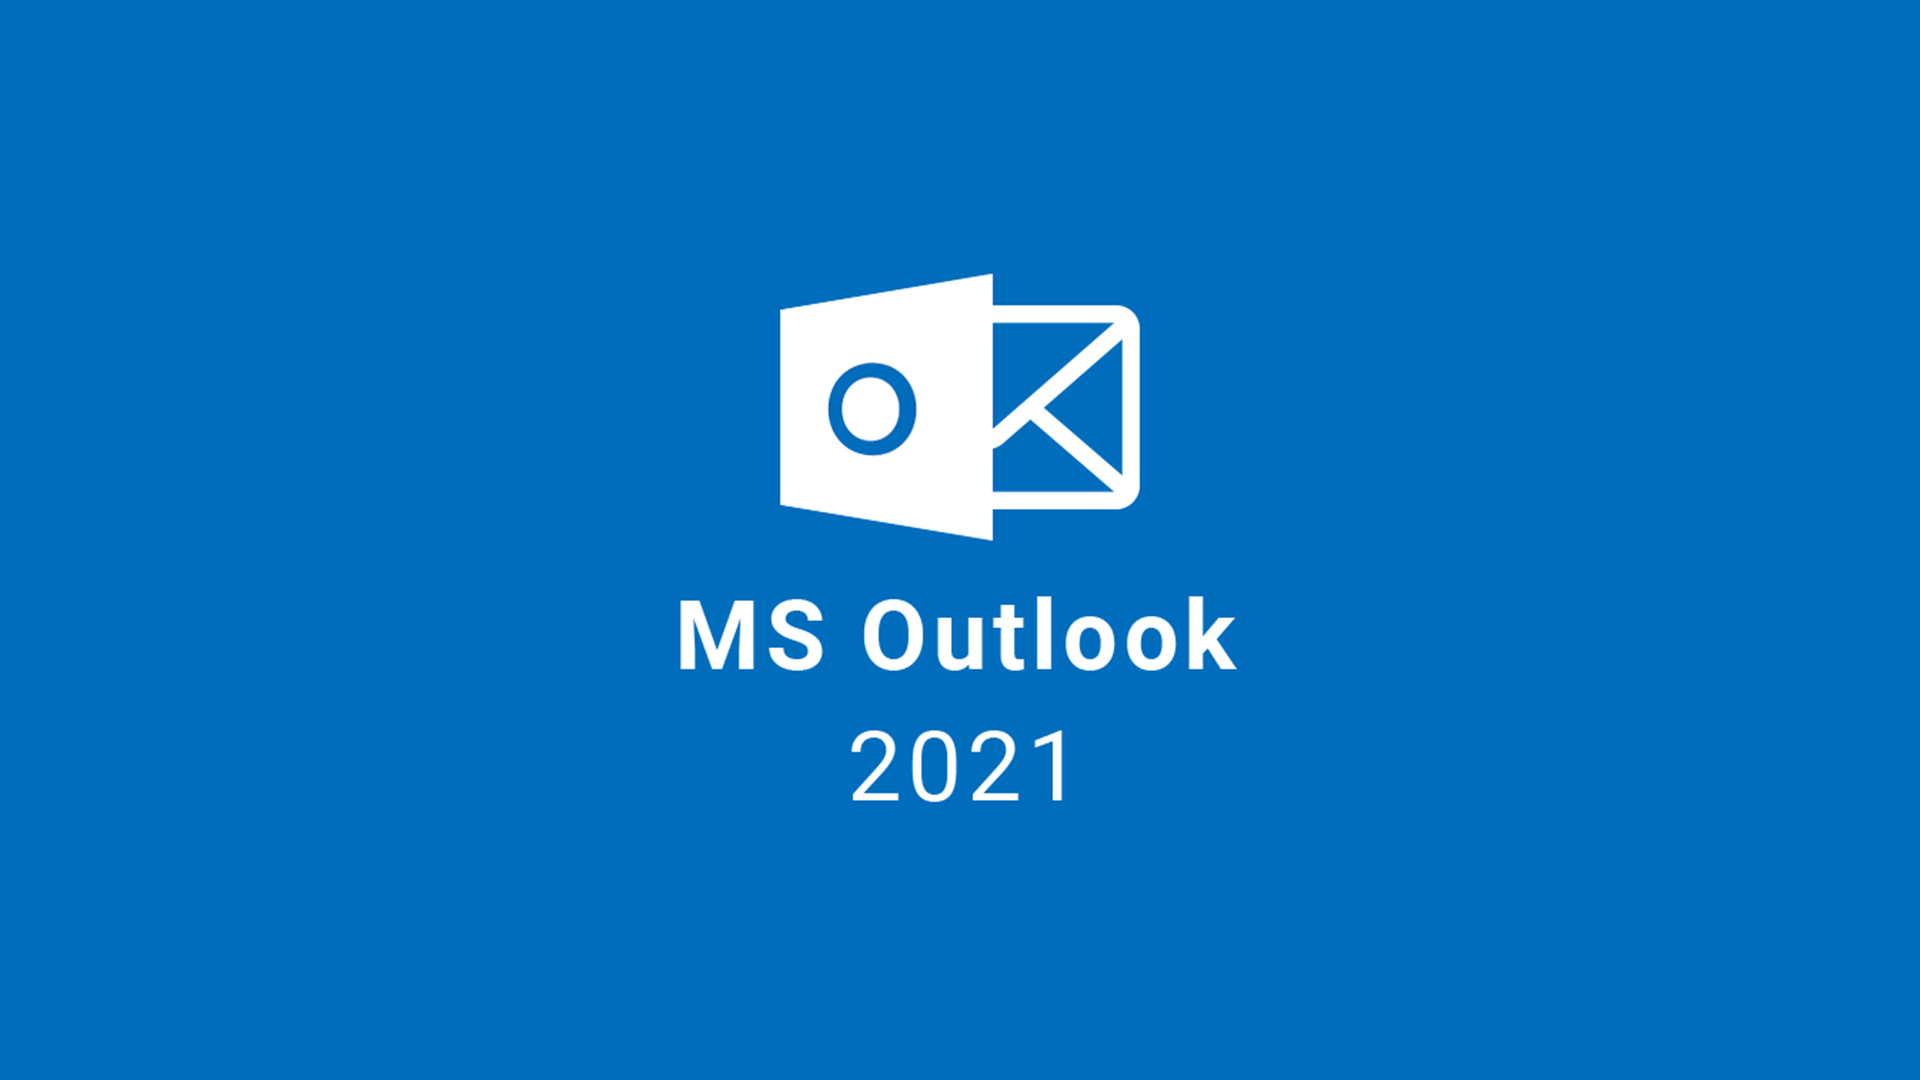 MS Outlook 2021 CD Key 26.49 $